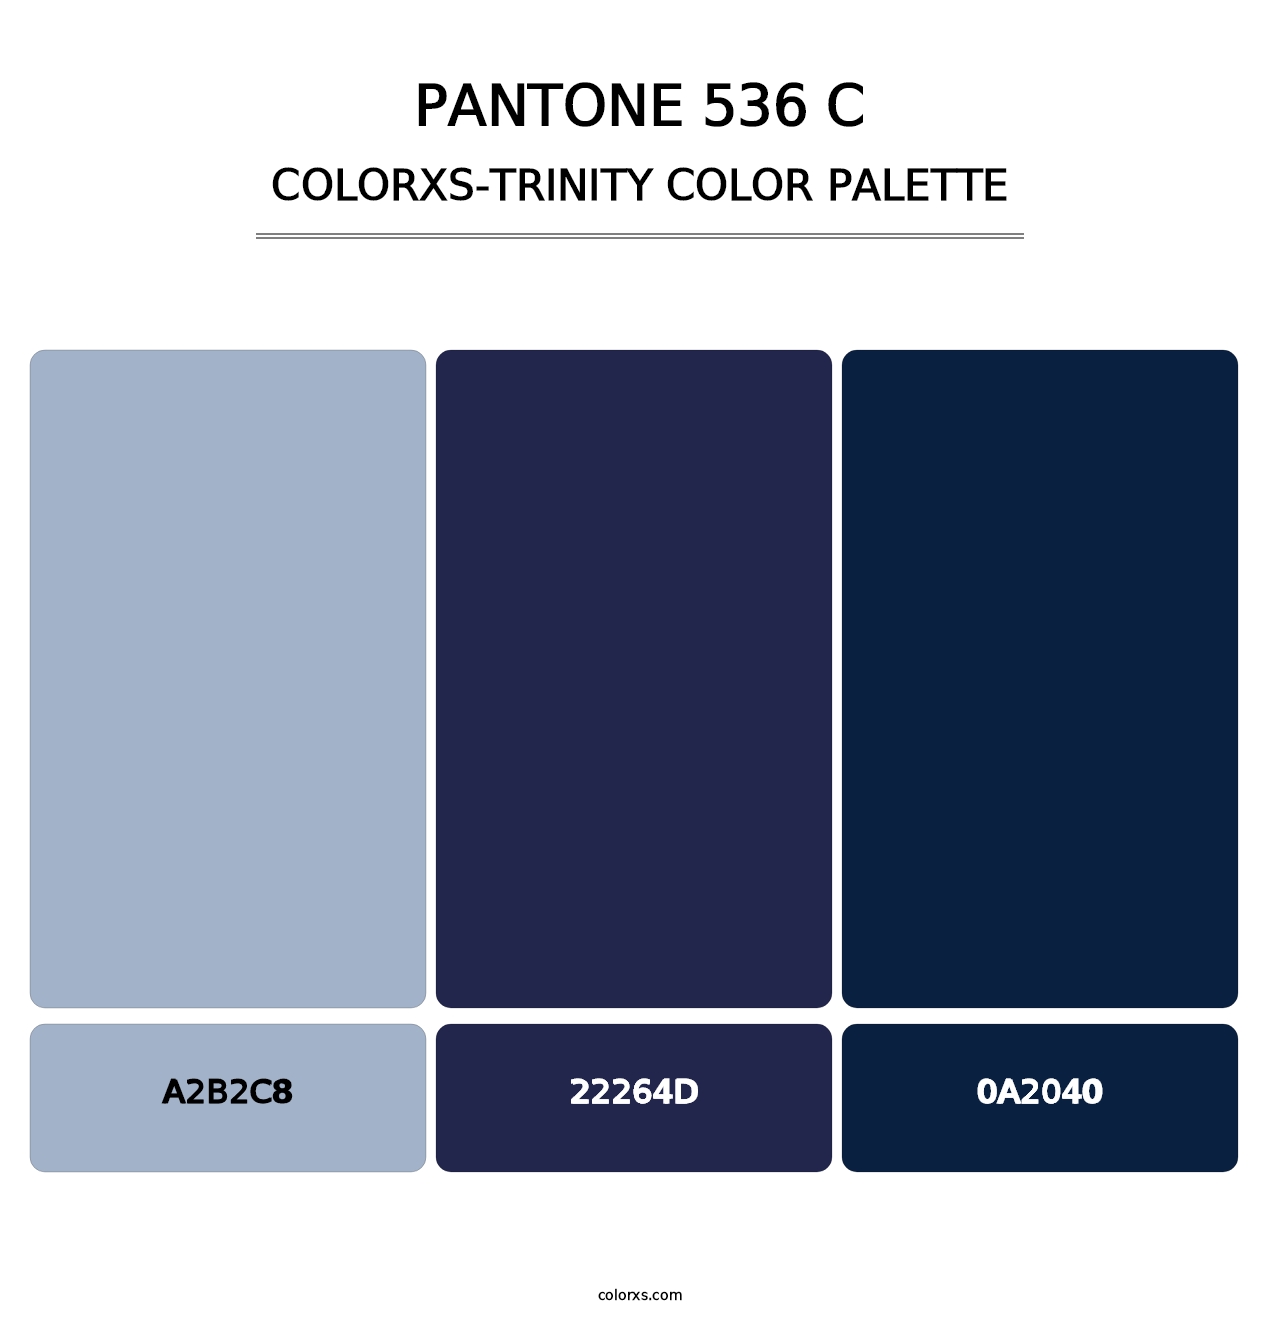 PANTONE 536 C - Colorxs Trinity Palette